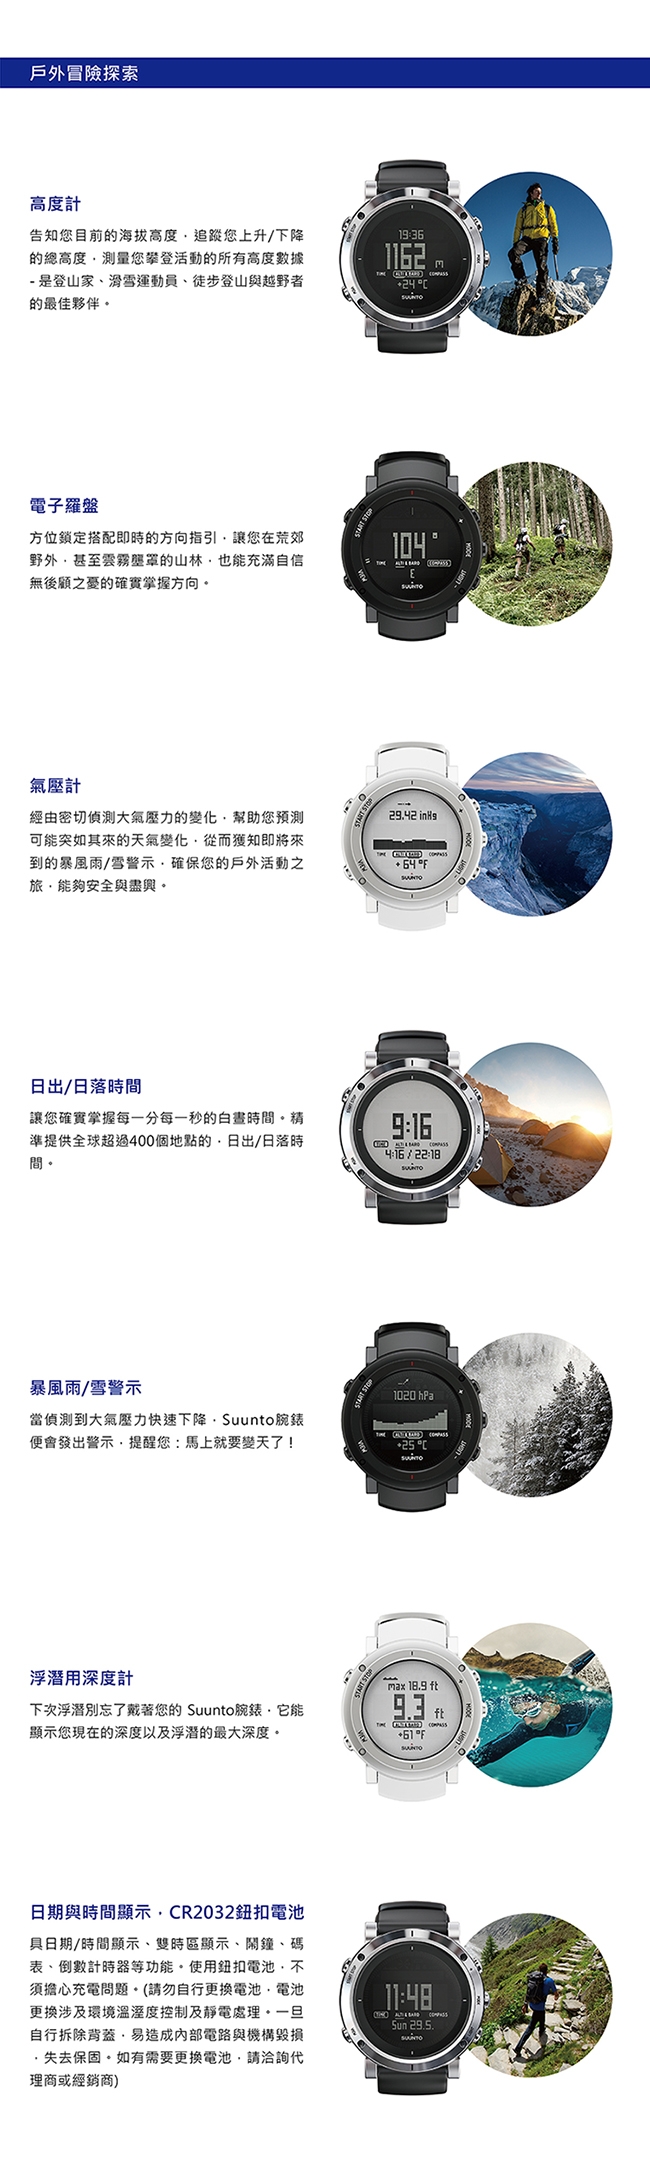 SUUNTO時尚設計戶外功能運動錶-Core Alu